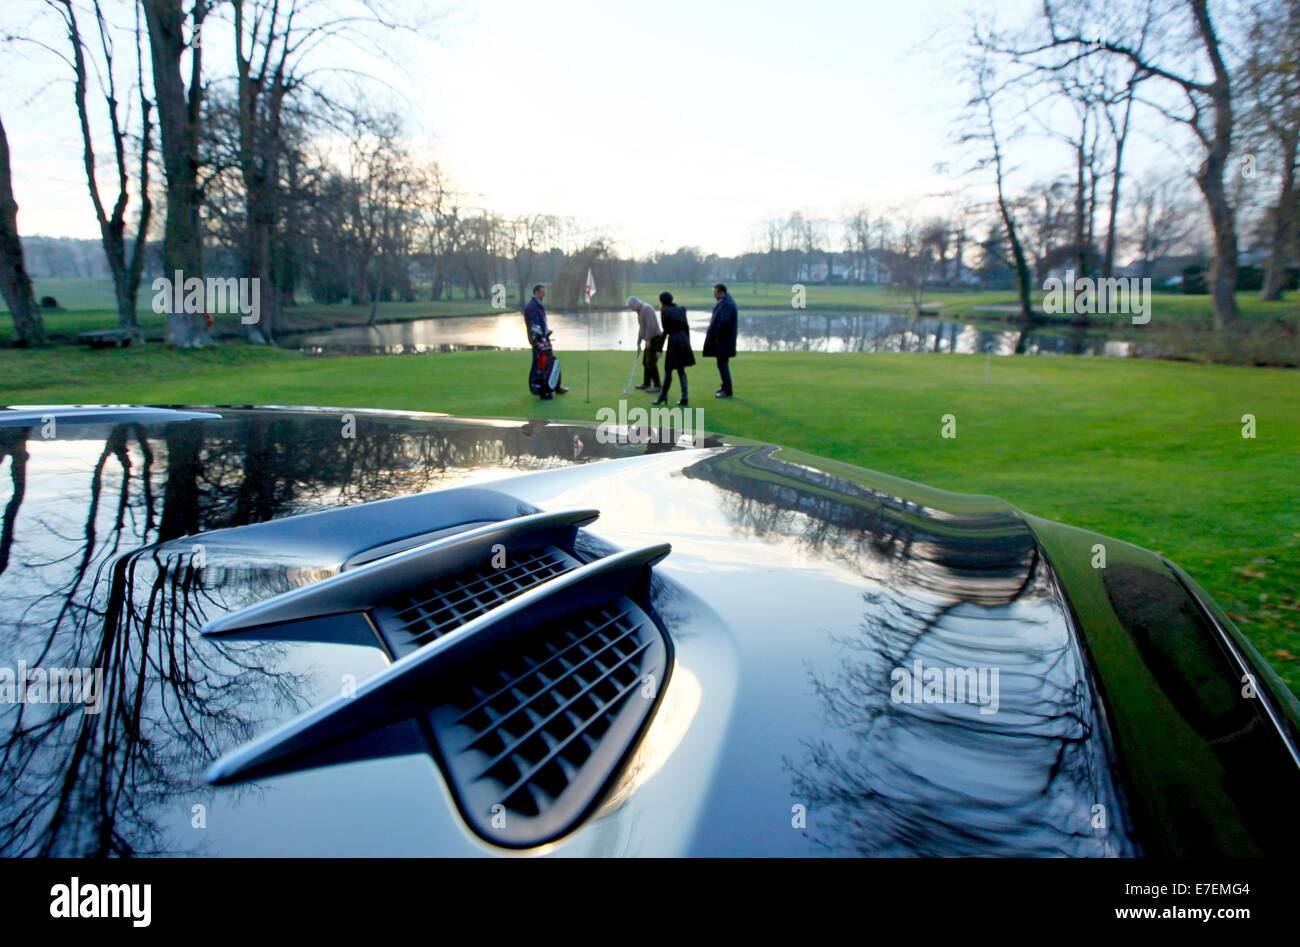 Charles scellini, Thibaud Assante, Eric Censier e Audrey test della Mercedes AMG SL 63 al Gueux Golf Club Reims, Champagne-Ardenne, Francia. Foto Stock